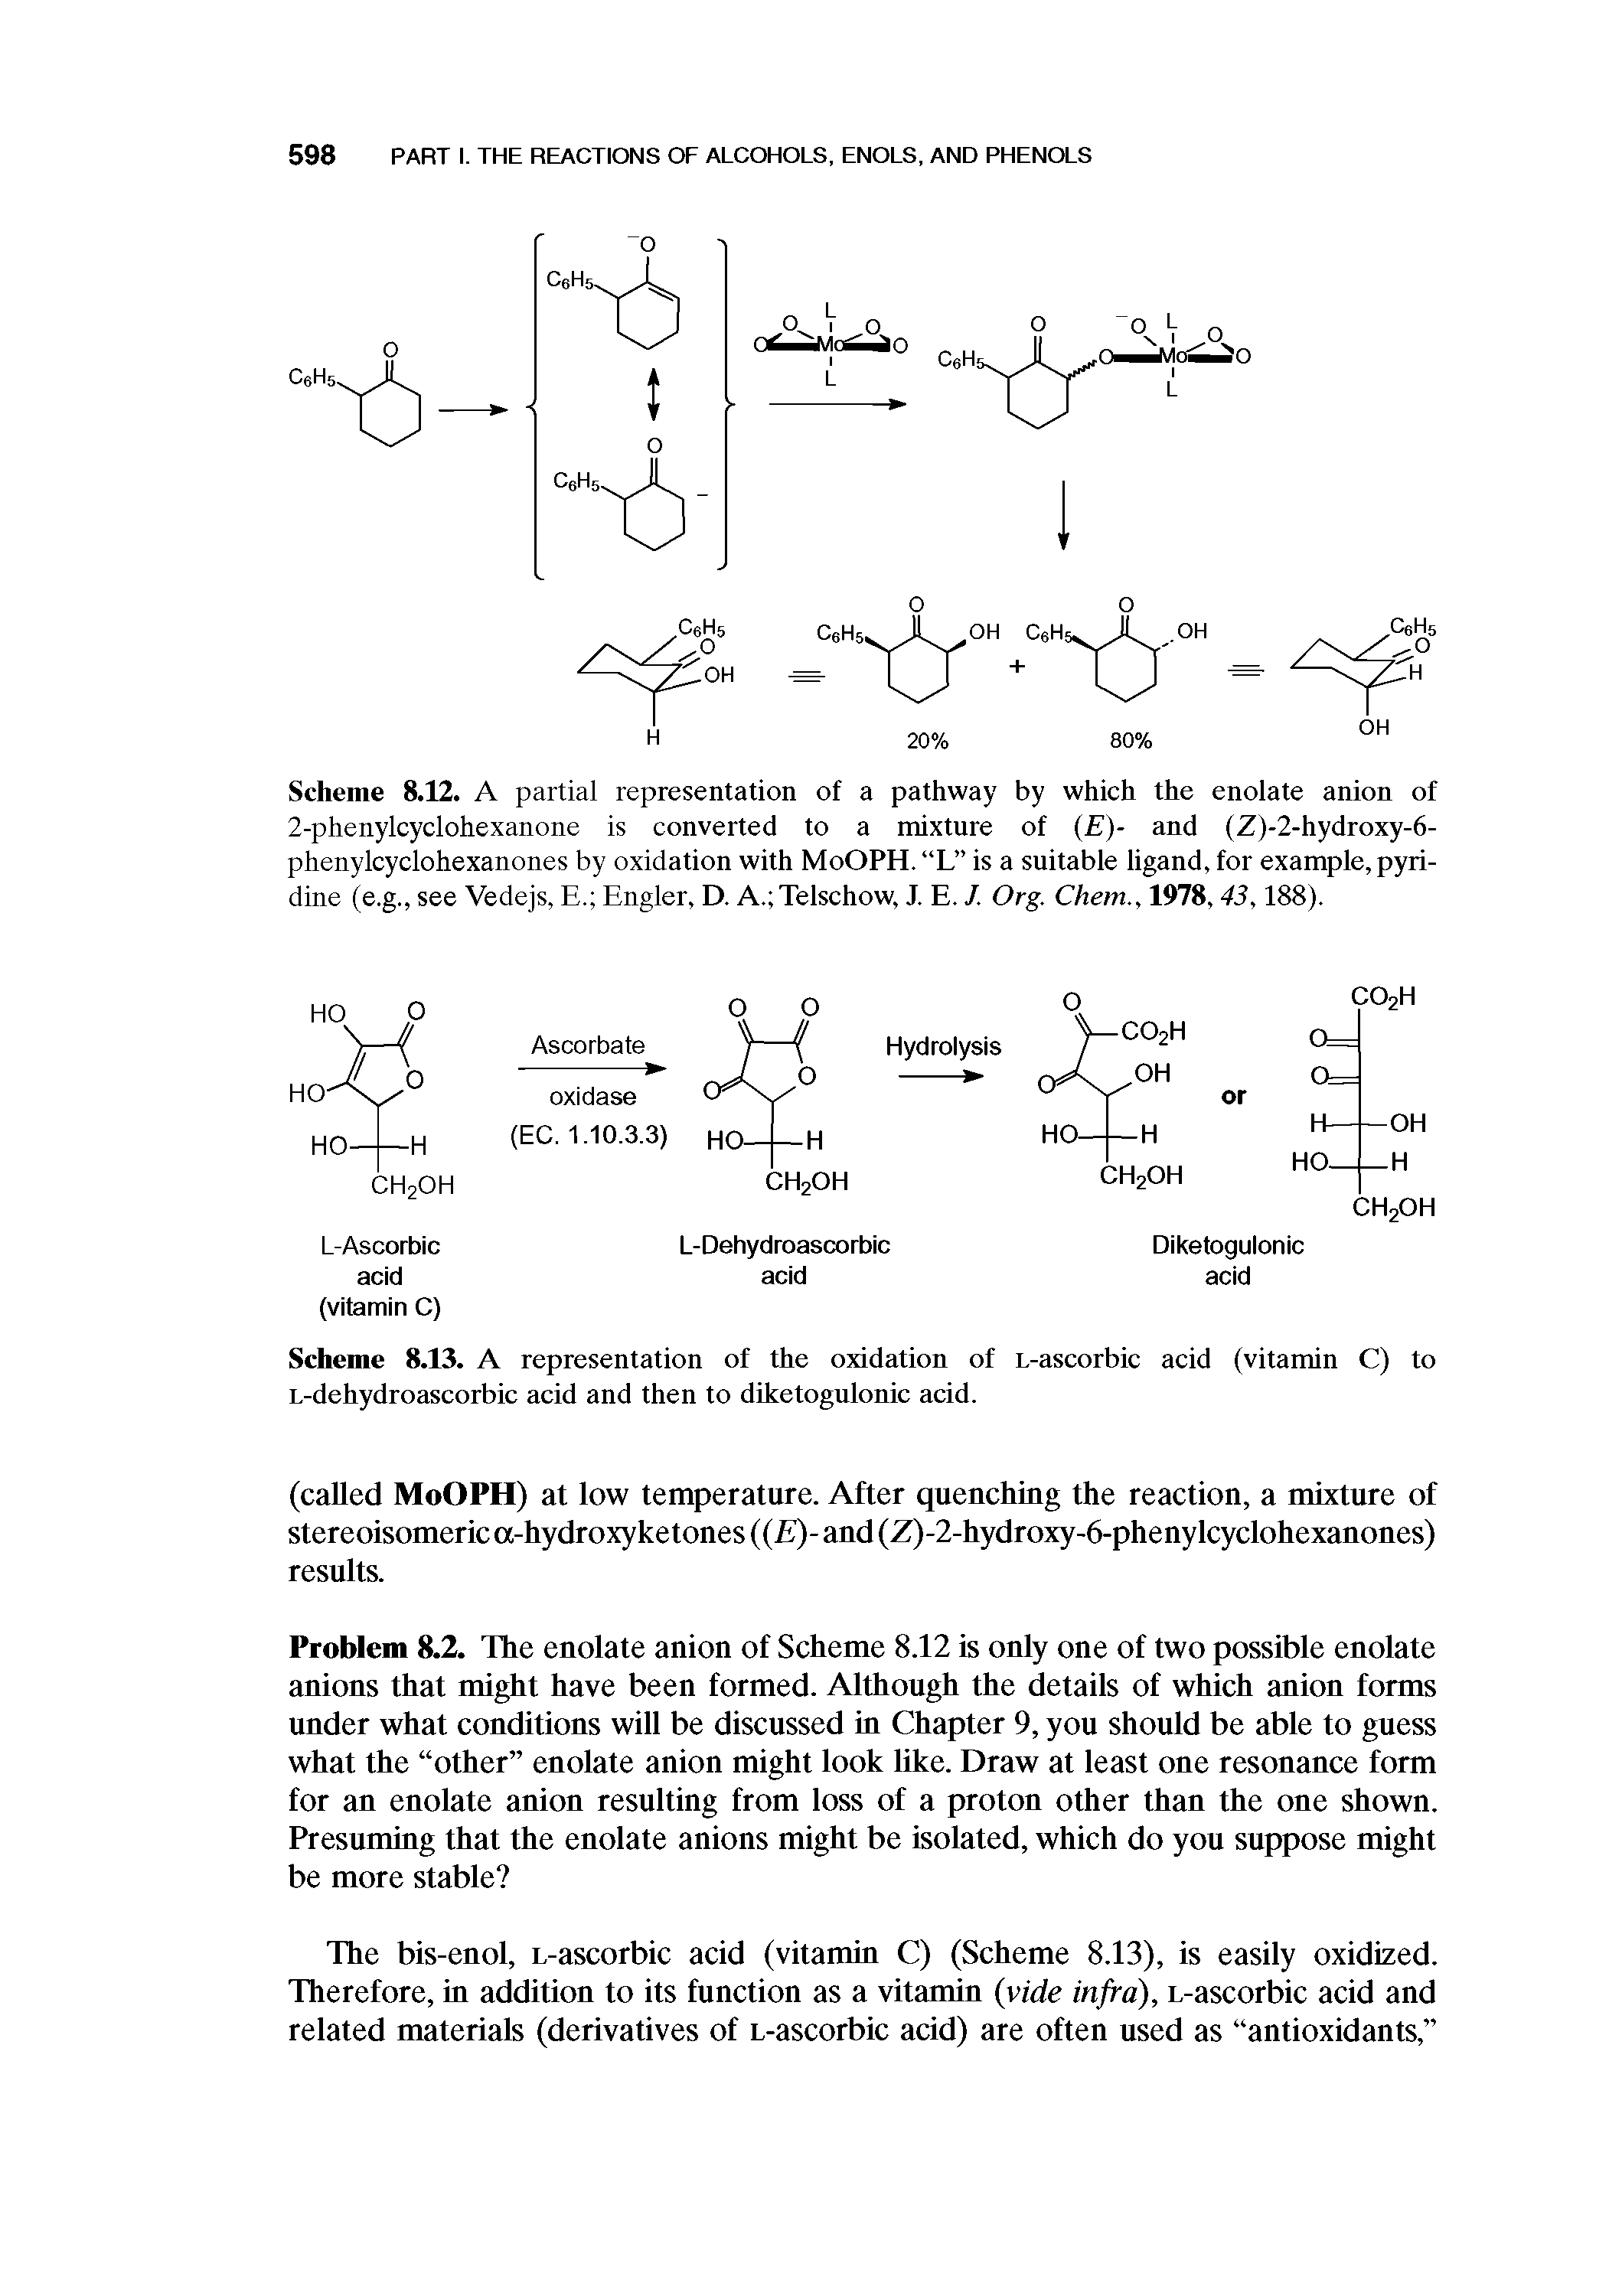 Scheme 8.13. A representation of the oxidation of L-ascorbic acid (vitamin C) to L-dehydroascorbic acid and then to diketogulonic acid.